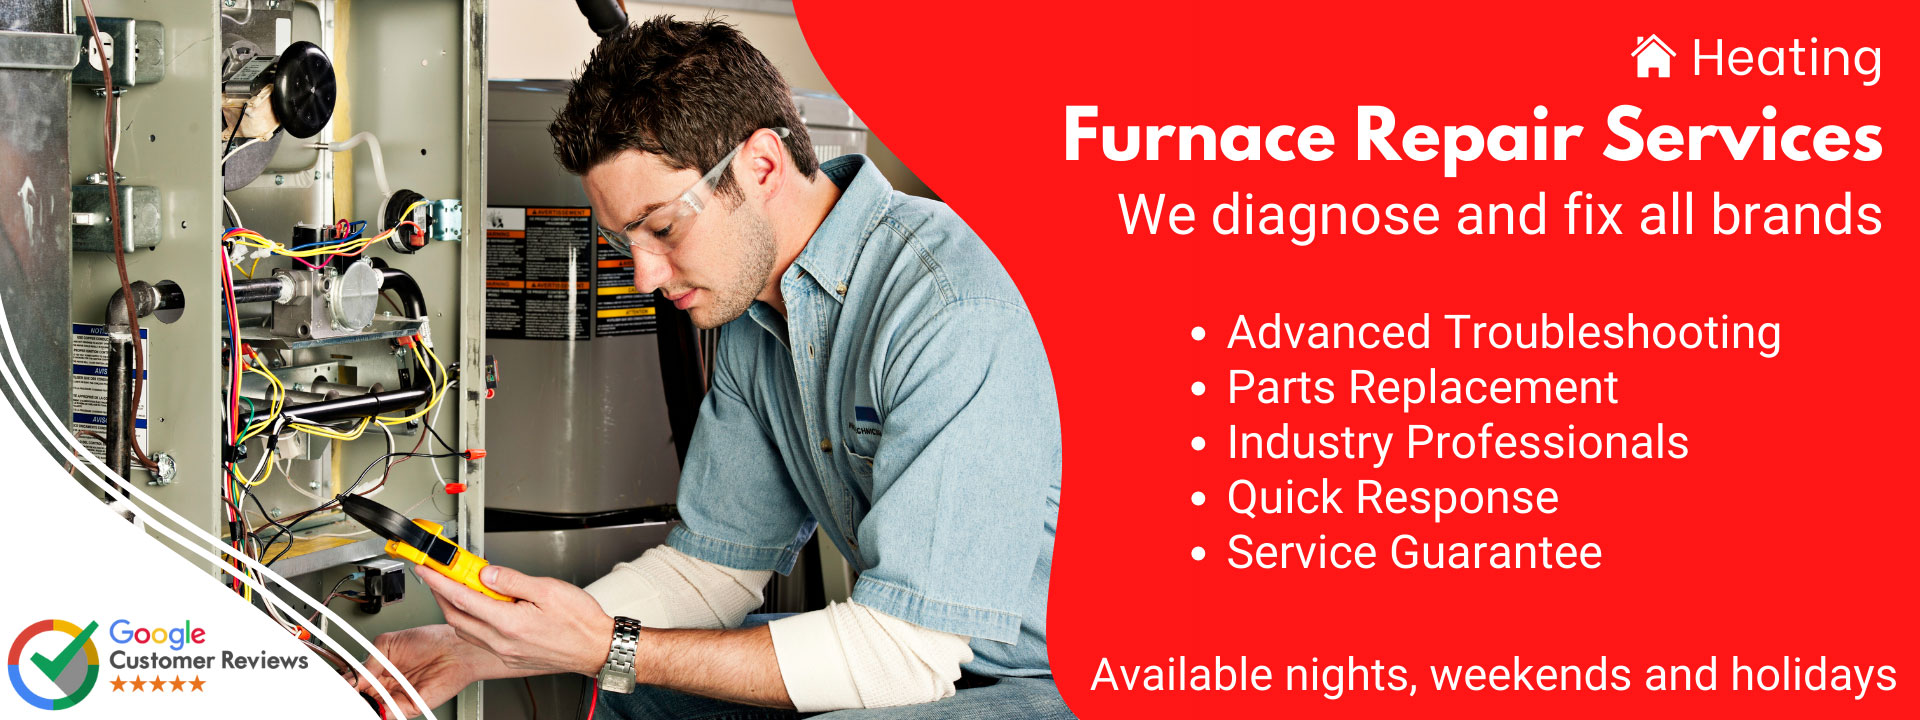 Furnace Repair Services Milwaukee Wisconsin